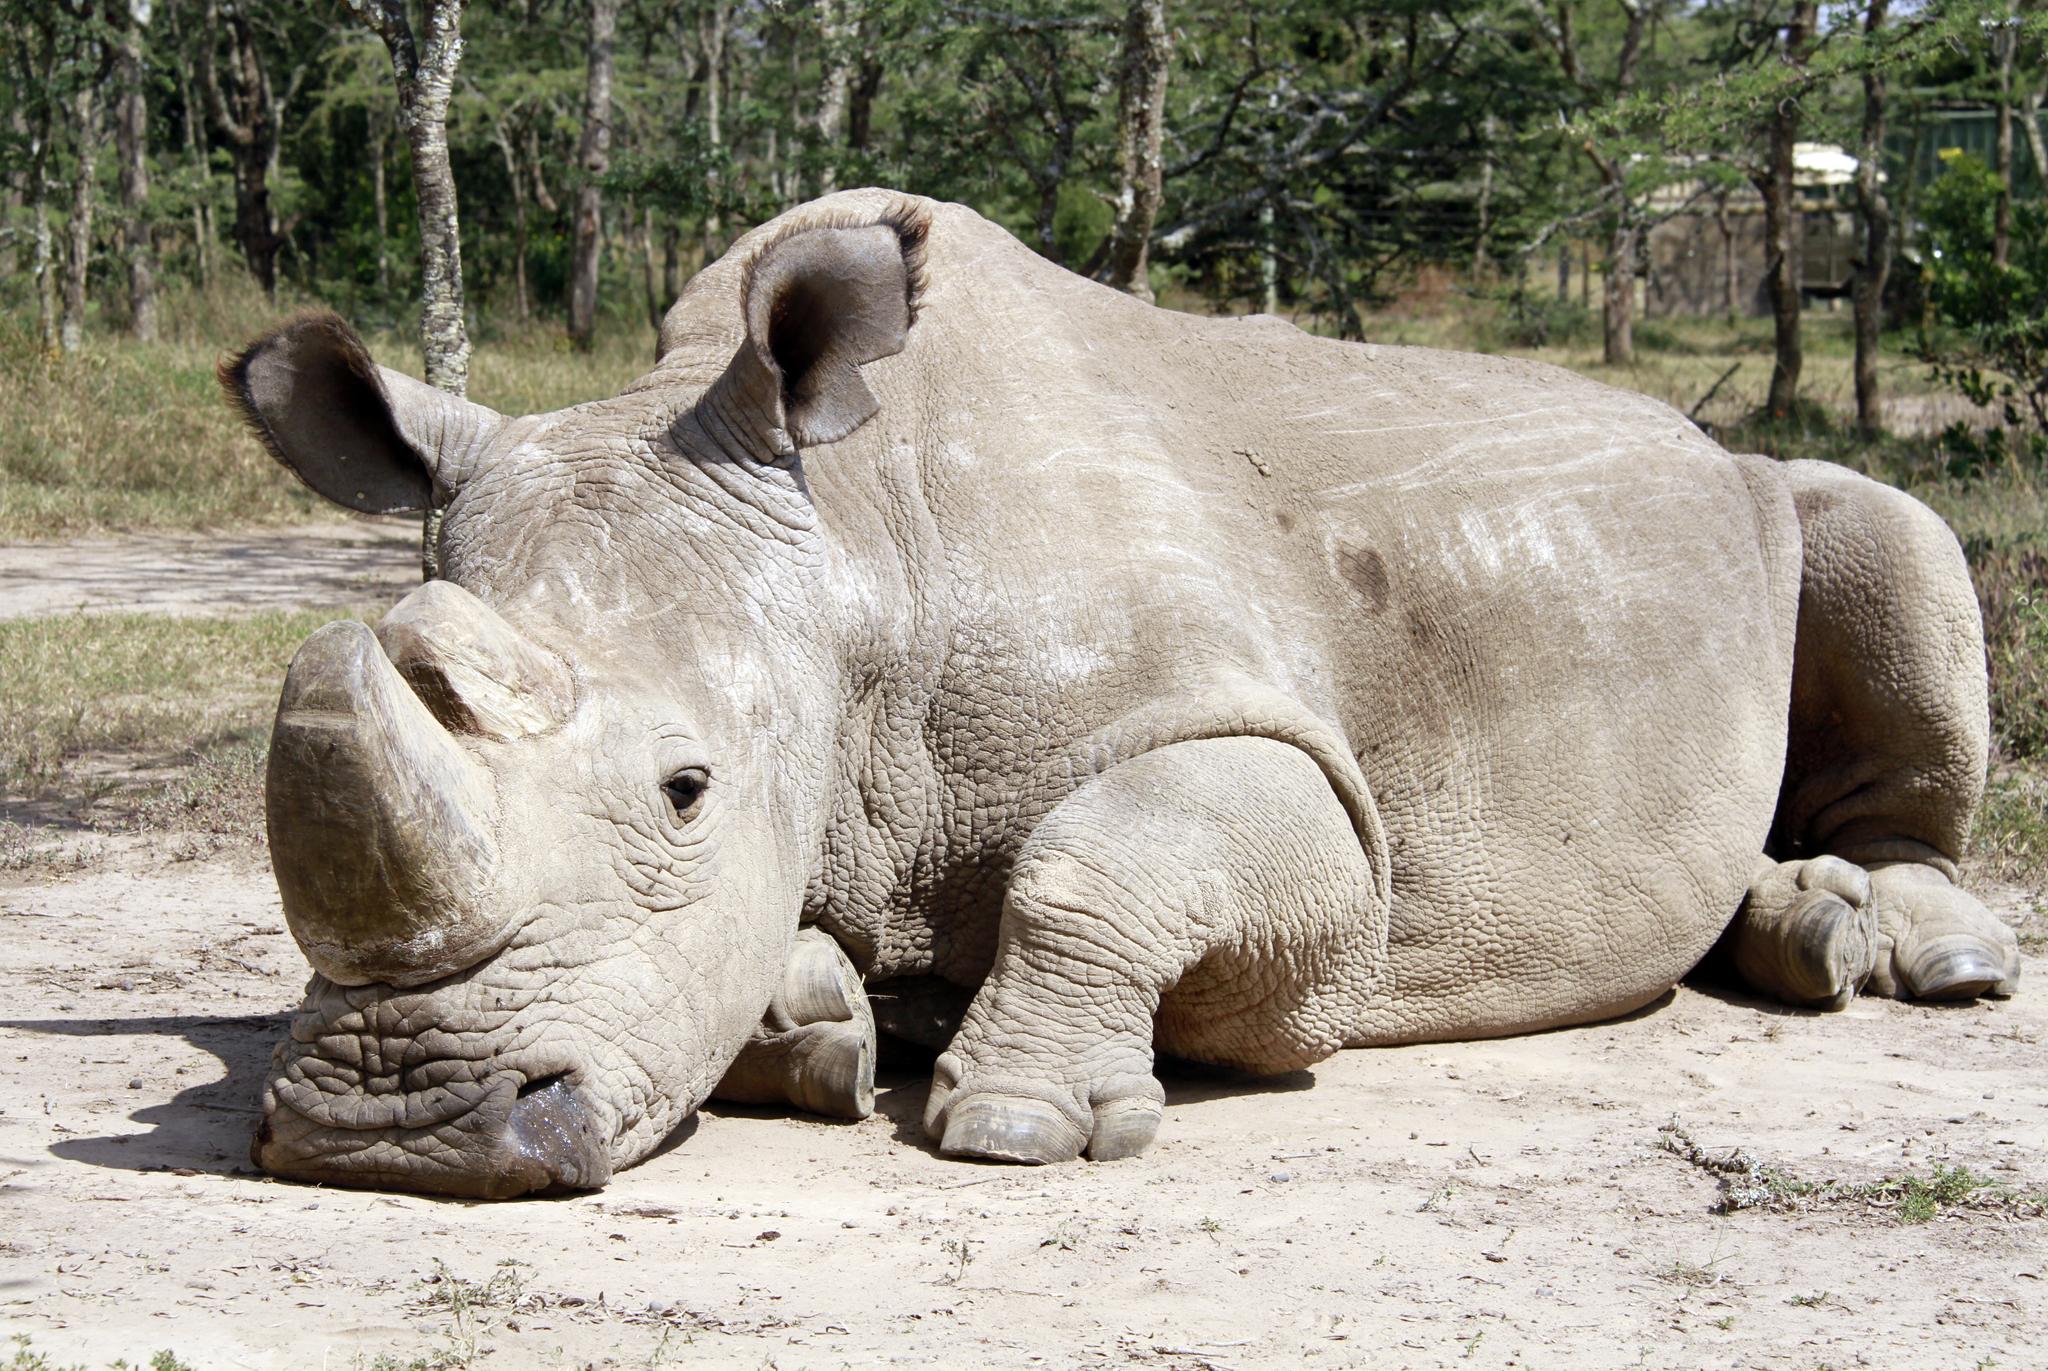 Sudan is the world’s last male northern white rhino